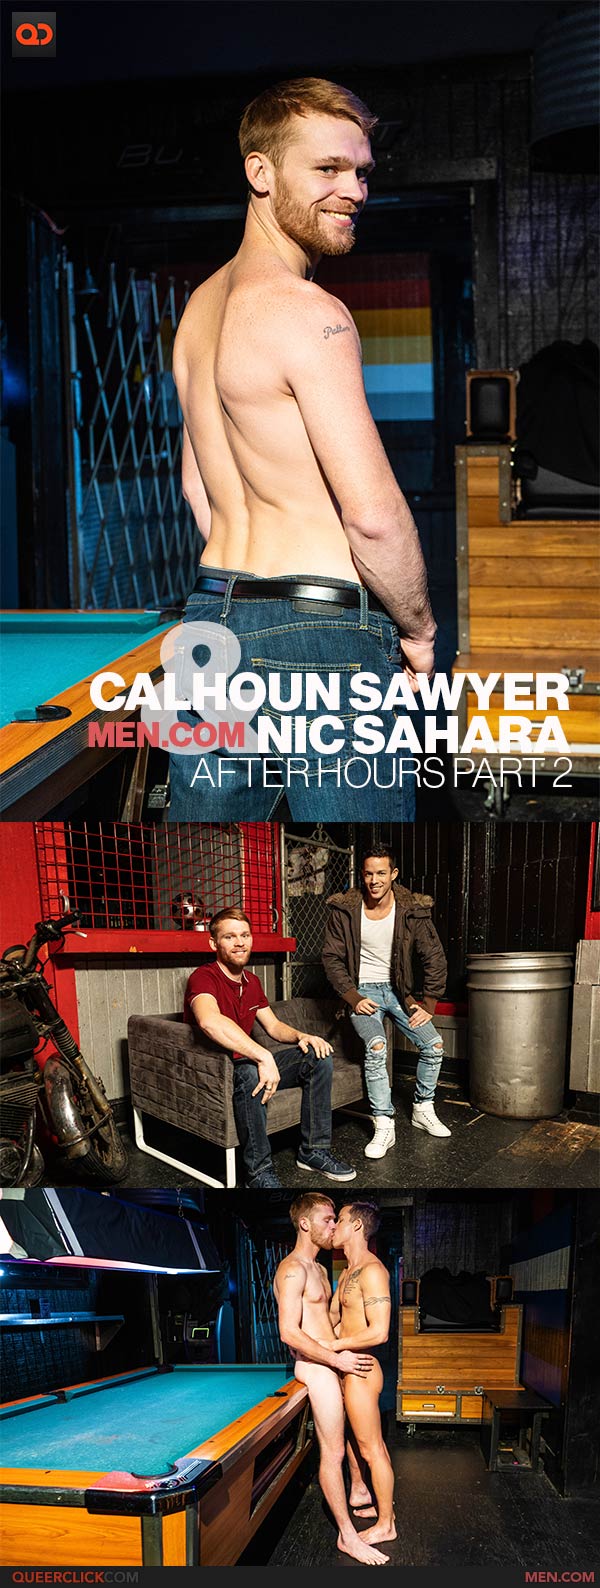 Men.com: Calhoun Sawyer and Nic Sahara - After Hours Part 2